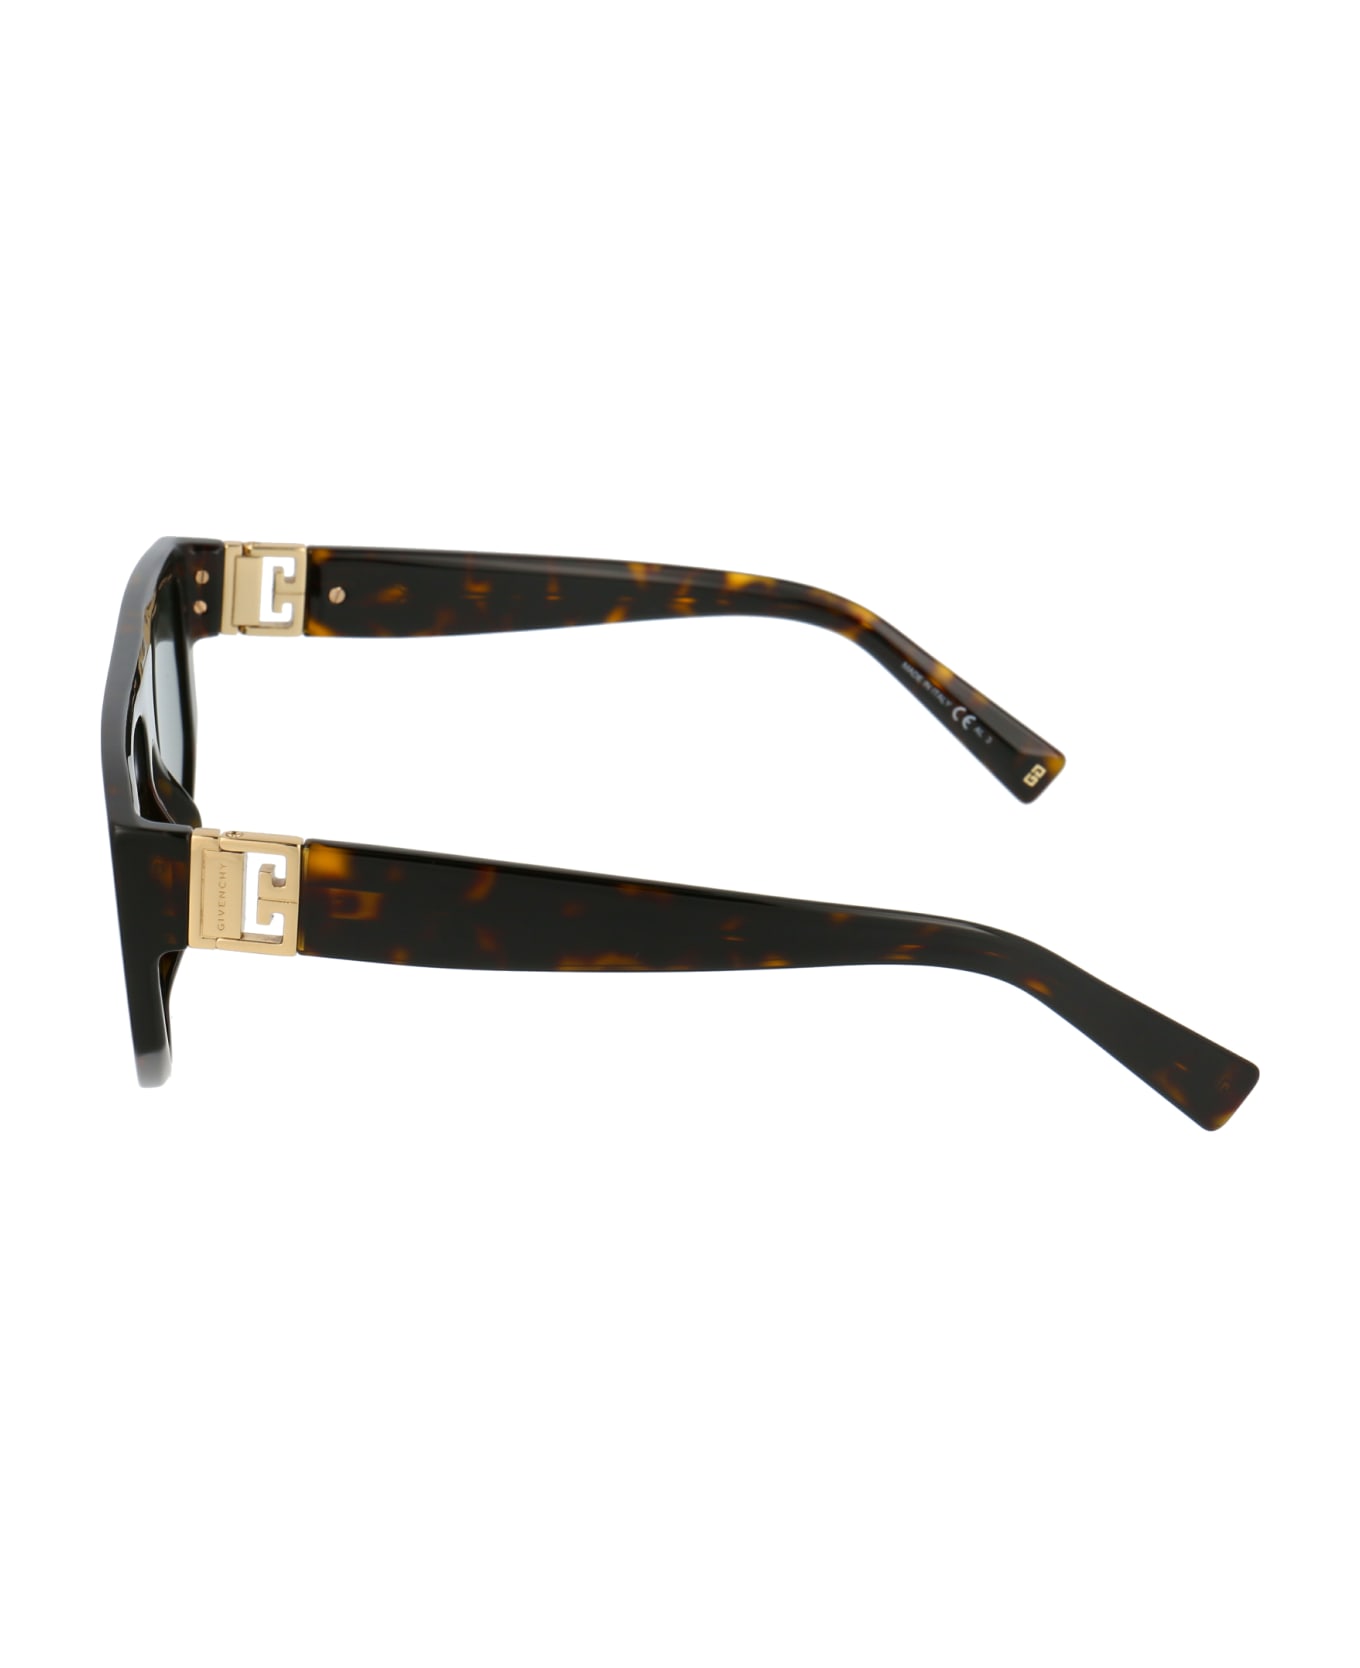 Givenchy Eyewear Gv 7156/s Sunglasses - 086QT HVN サングラス